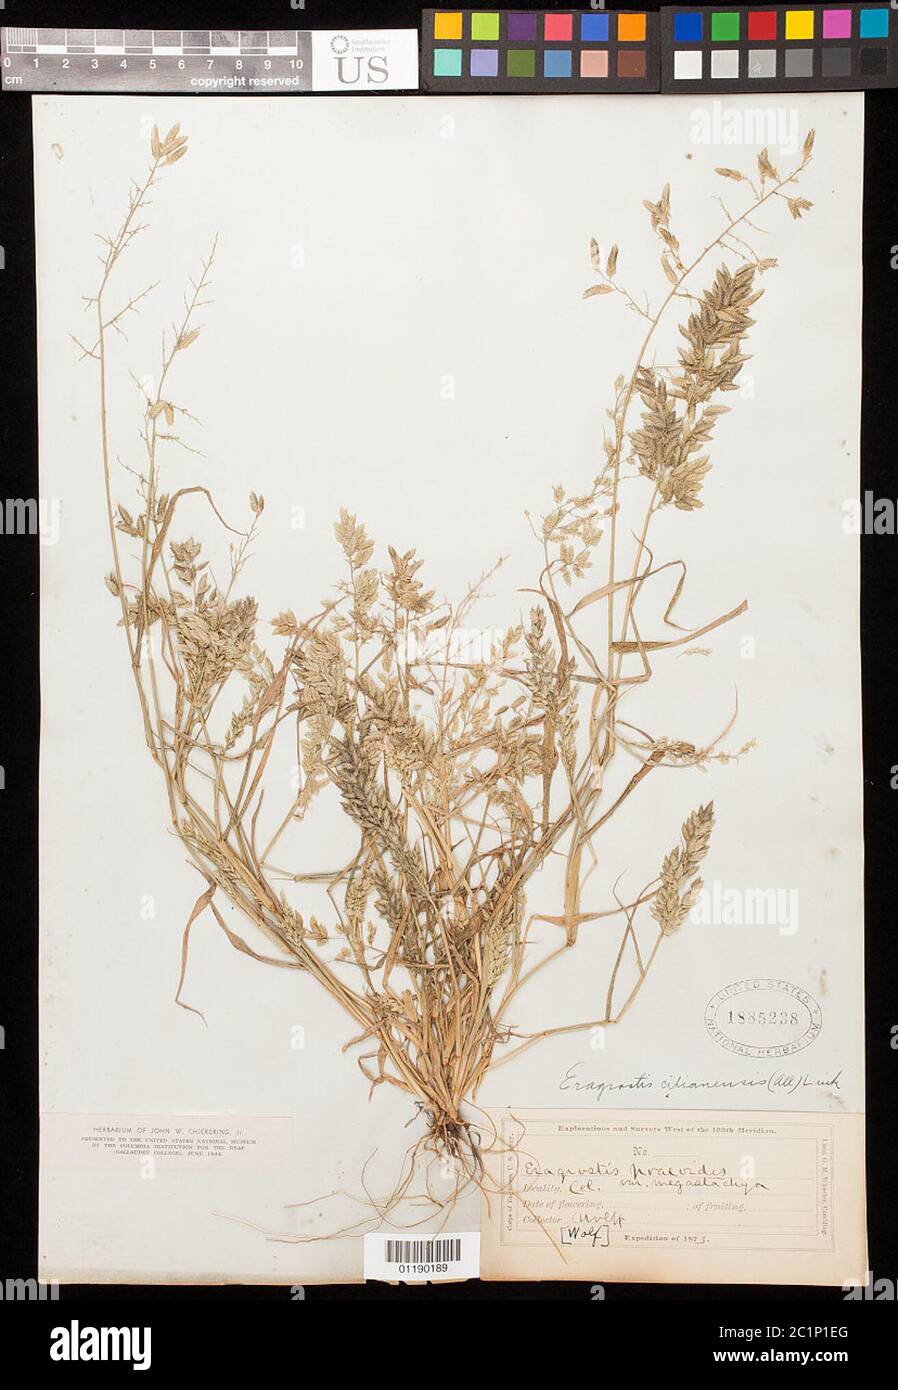 Eragrostis cilianensis All Vignolo ex Janch Eragrostis cilianensis All Vignolo ex Janch. Stock Photo